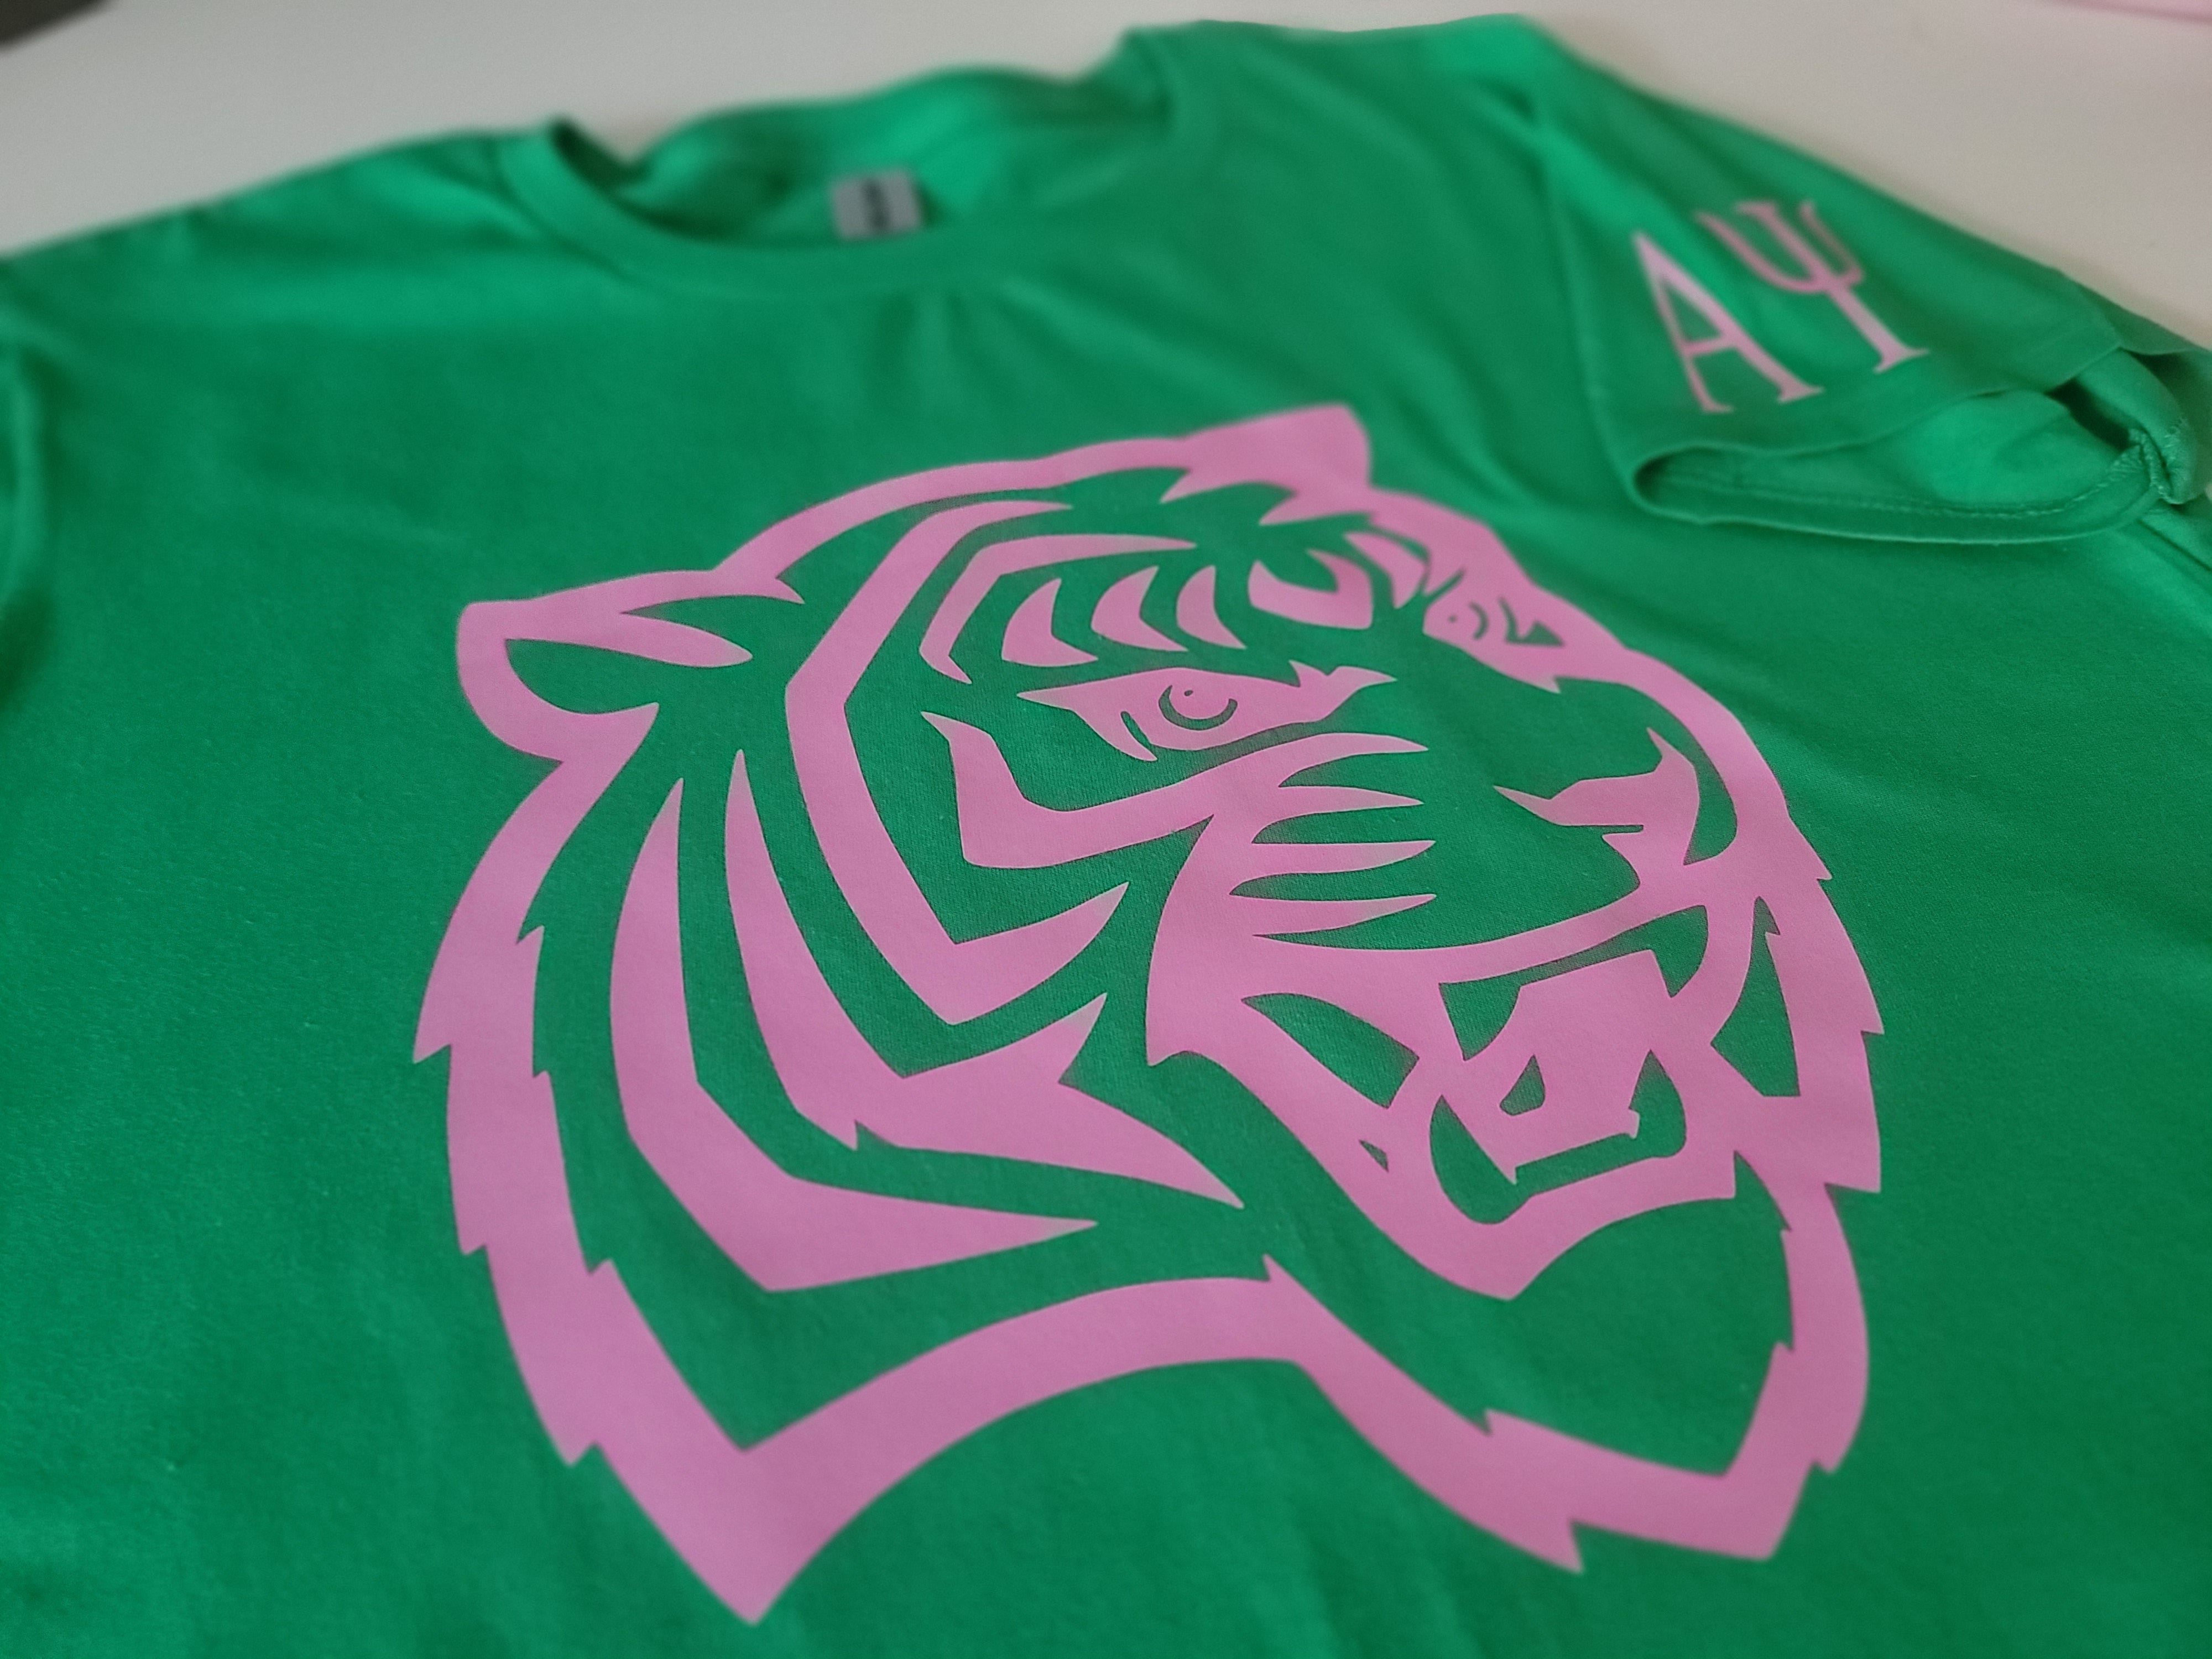 Alpha Psi Pink & Green logo Shirt